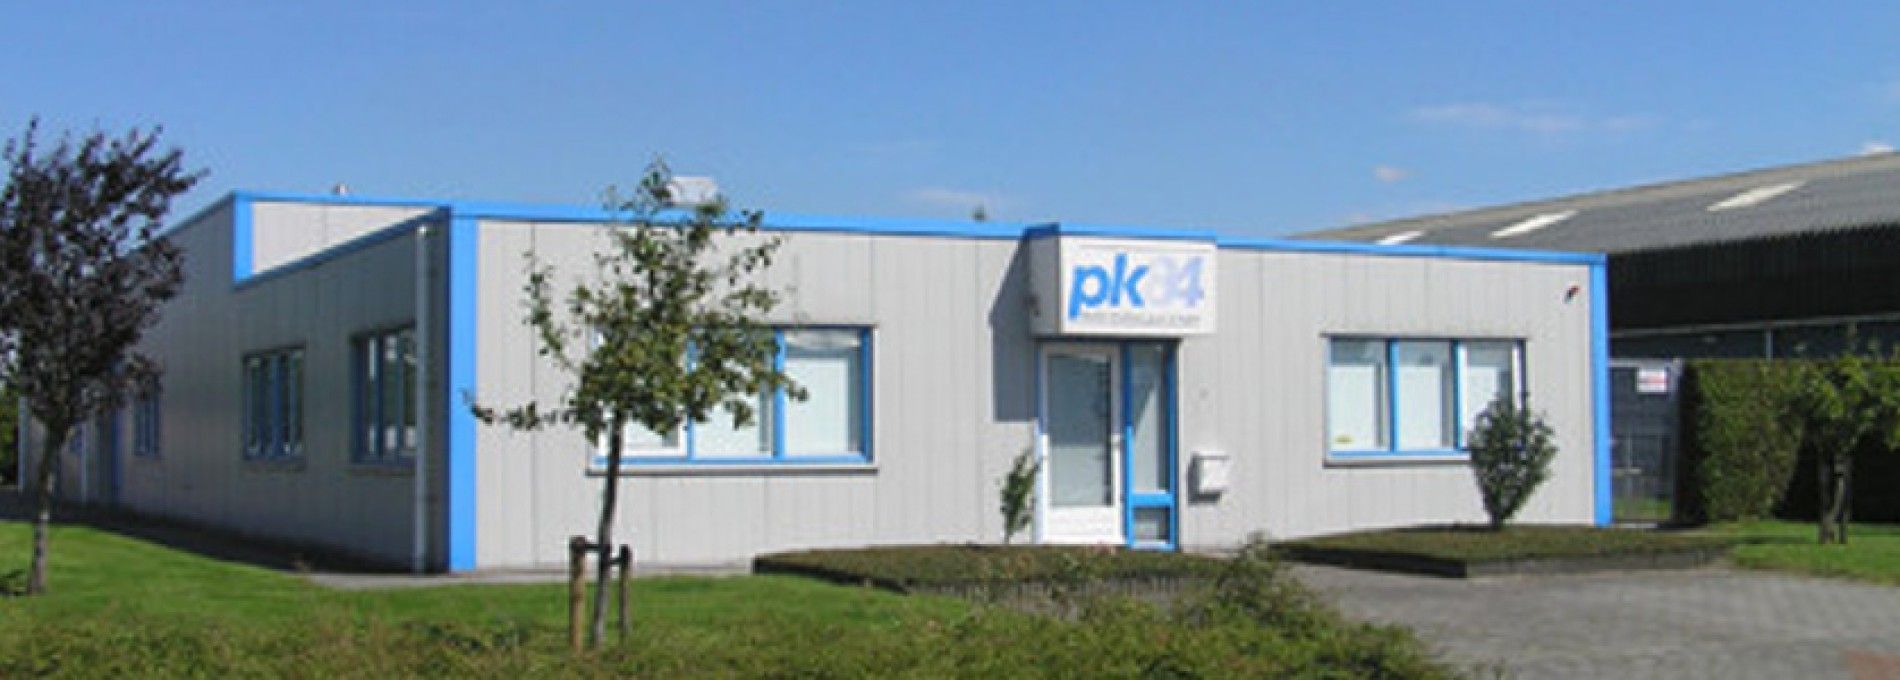 Studio & printing house PK84